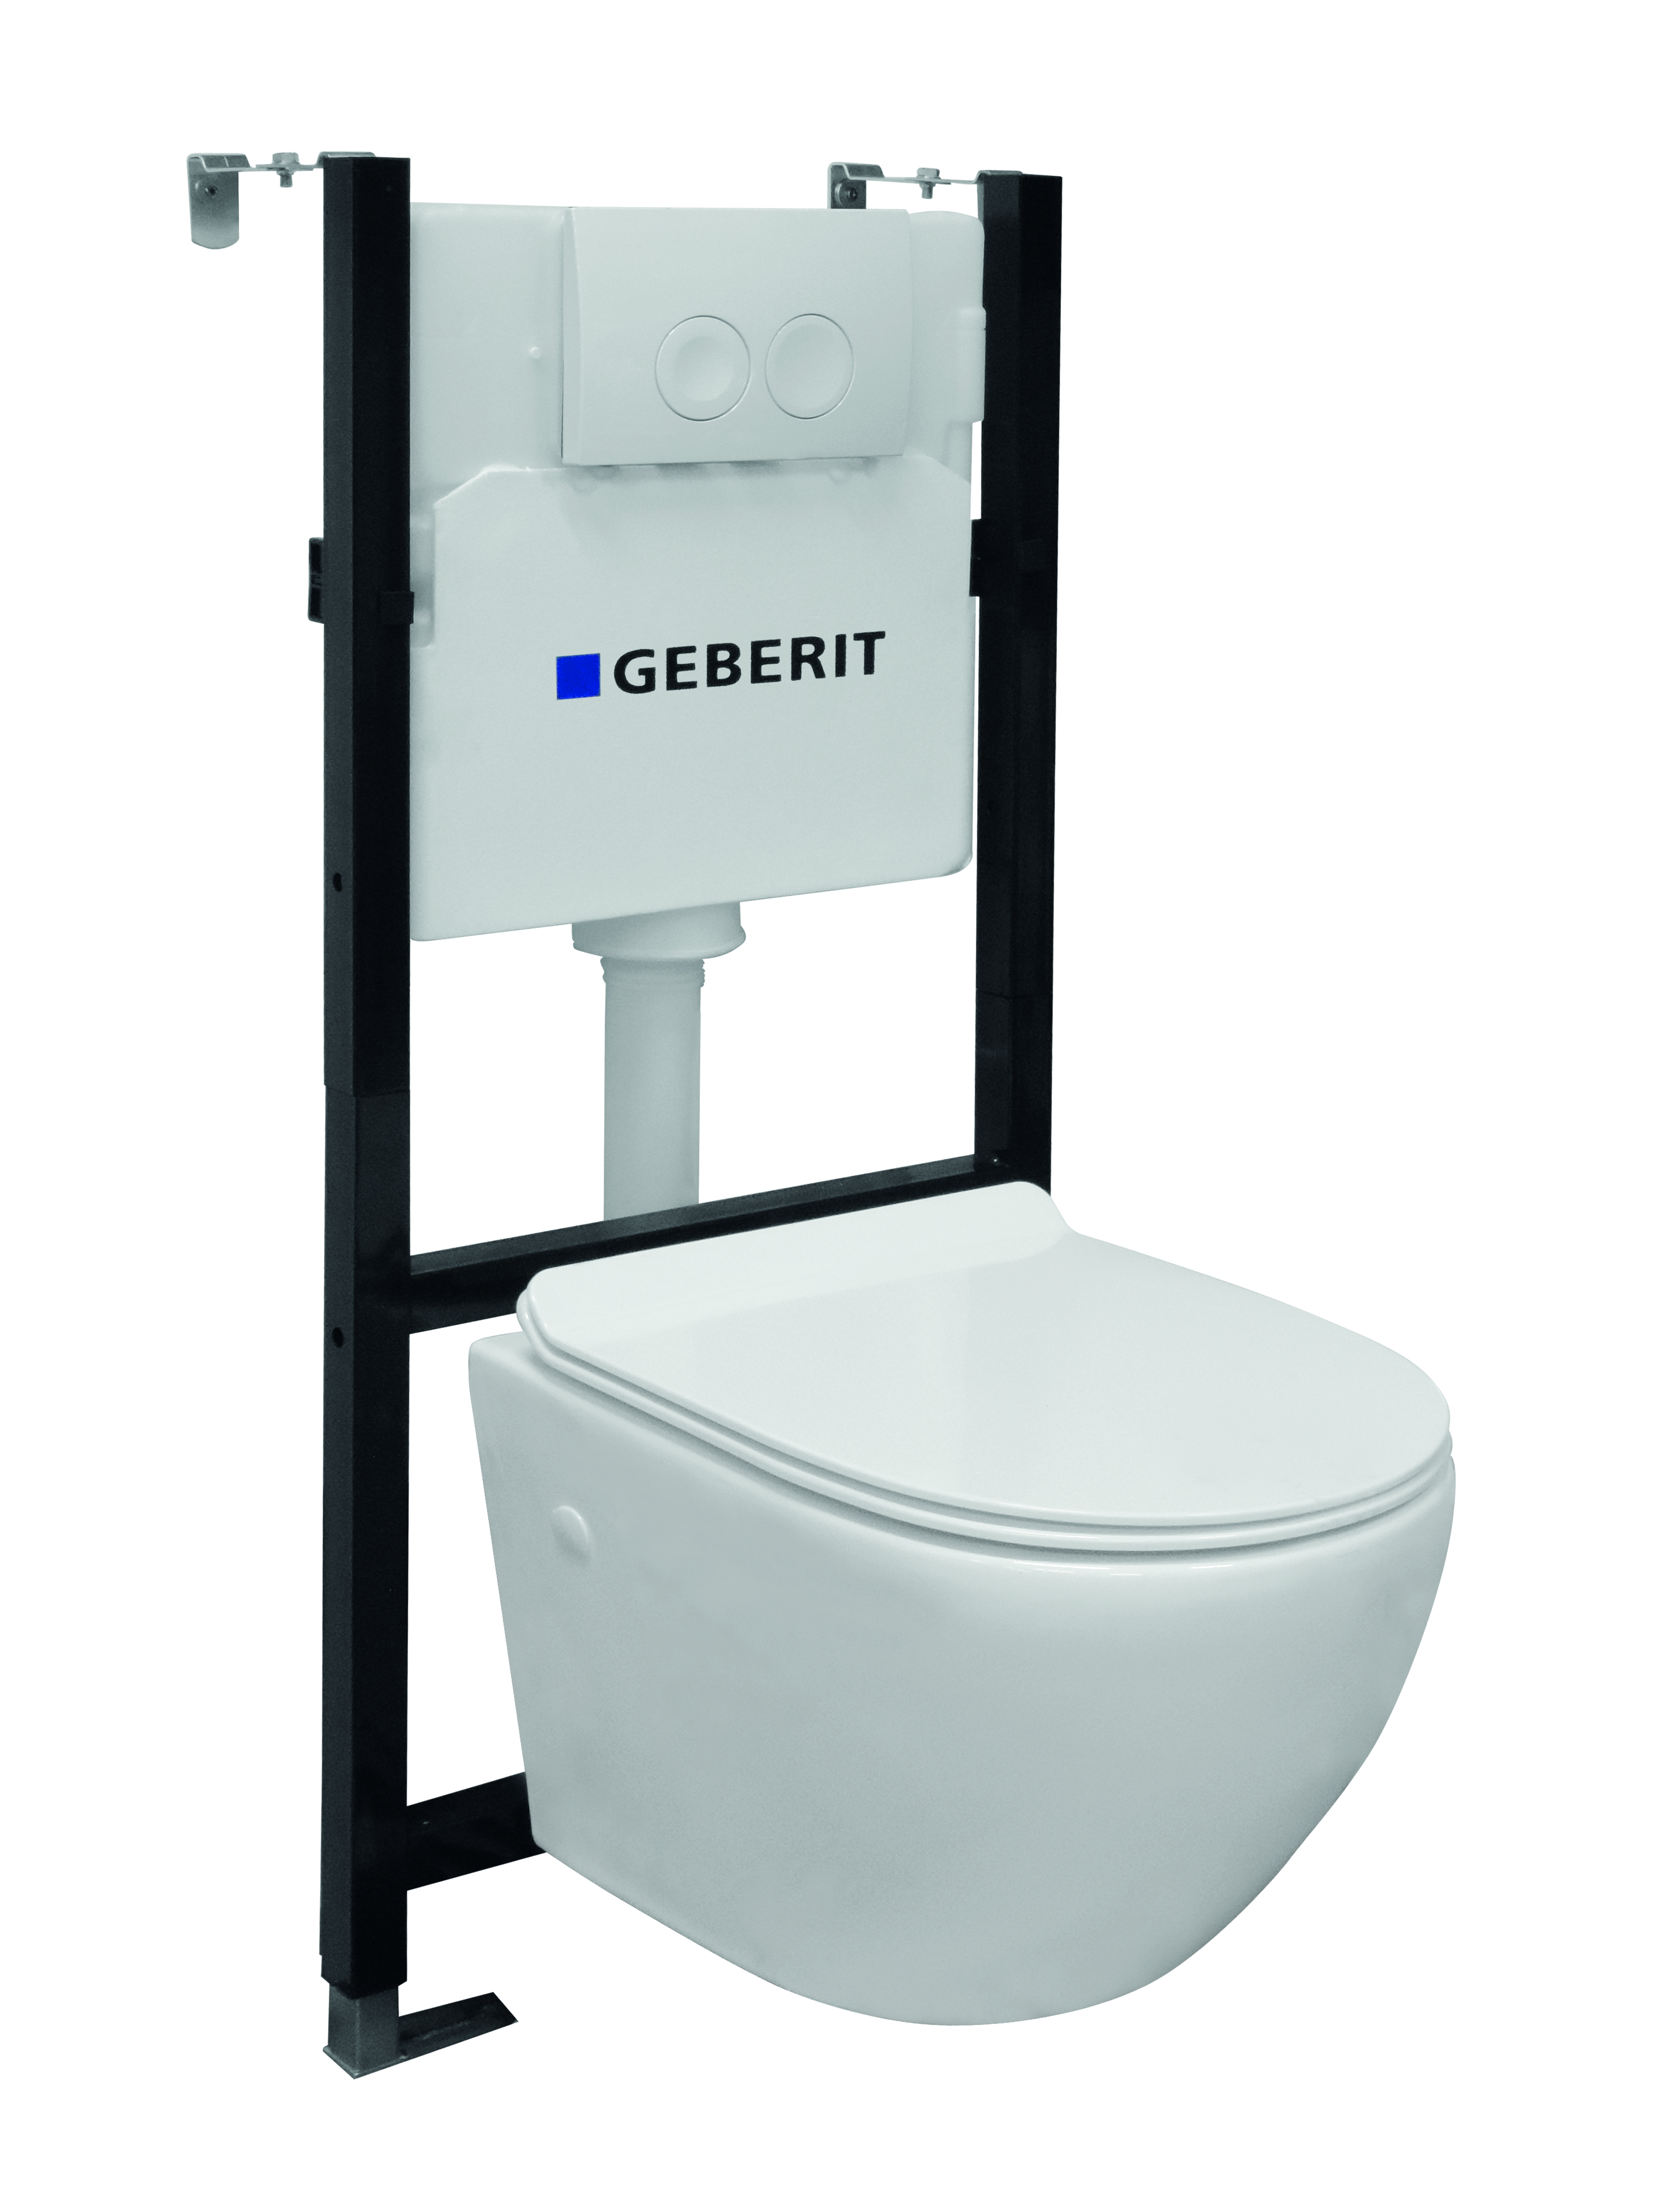 microfoon Vuilnisbak kolf Van Marcke inbouwreservoir set Design | Geberit spoeltechniek | Soft-close  toiletzitting | Randloos toiletpot